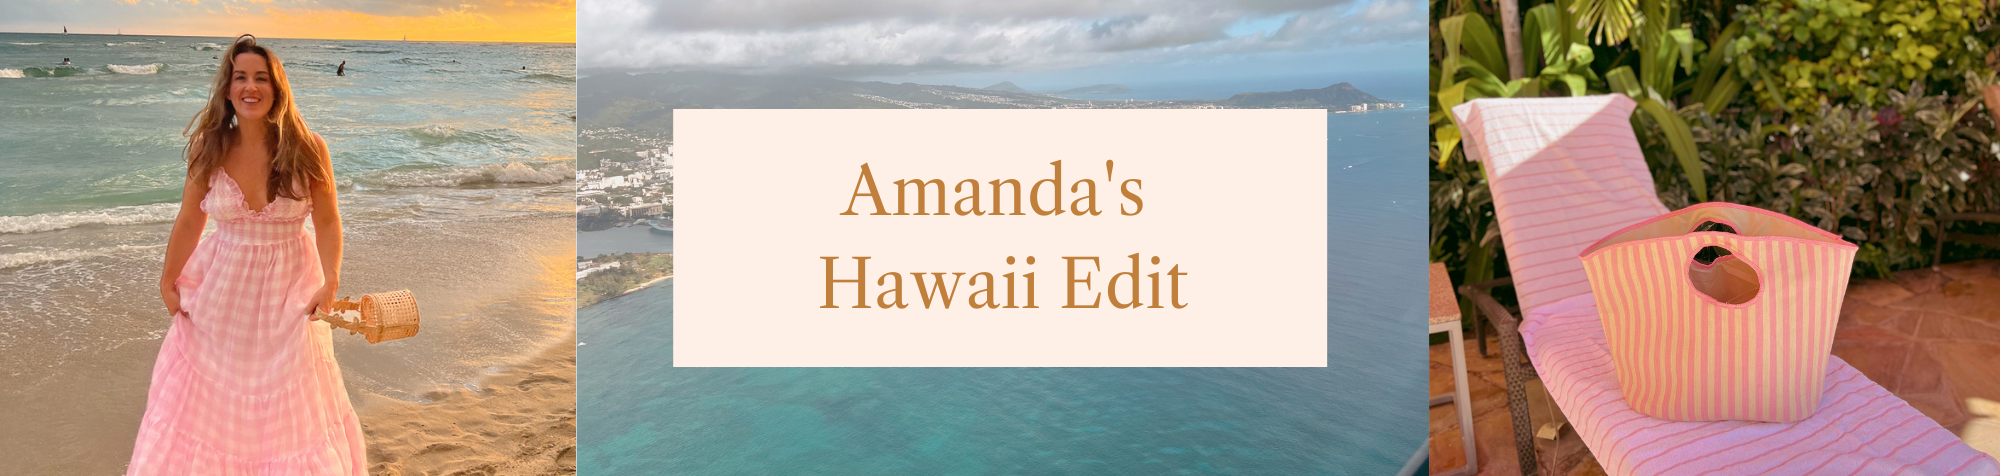 Amanda's Hawaii Edit